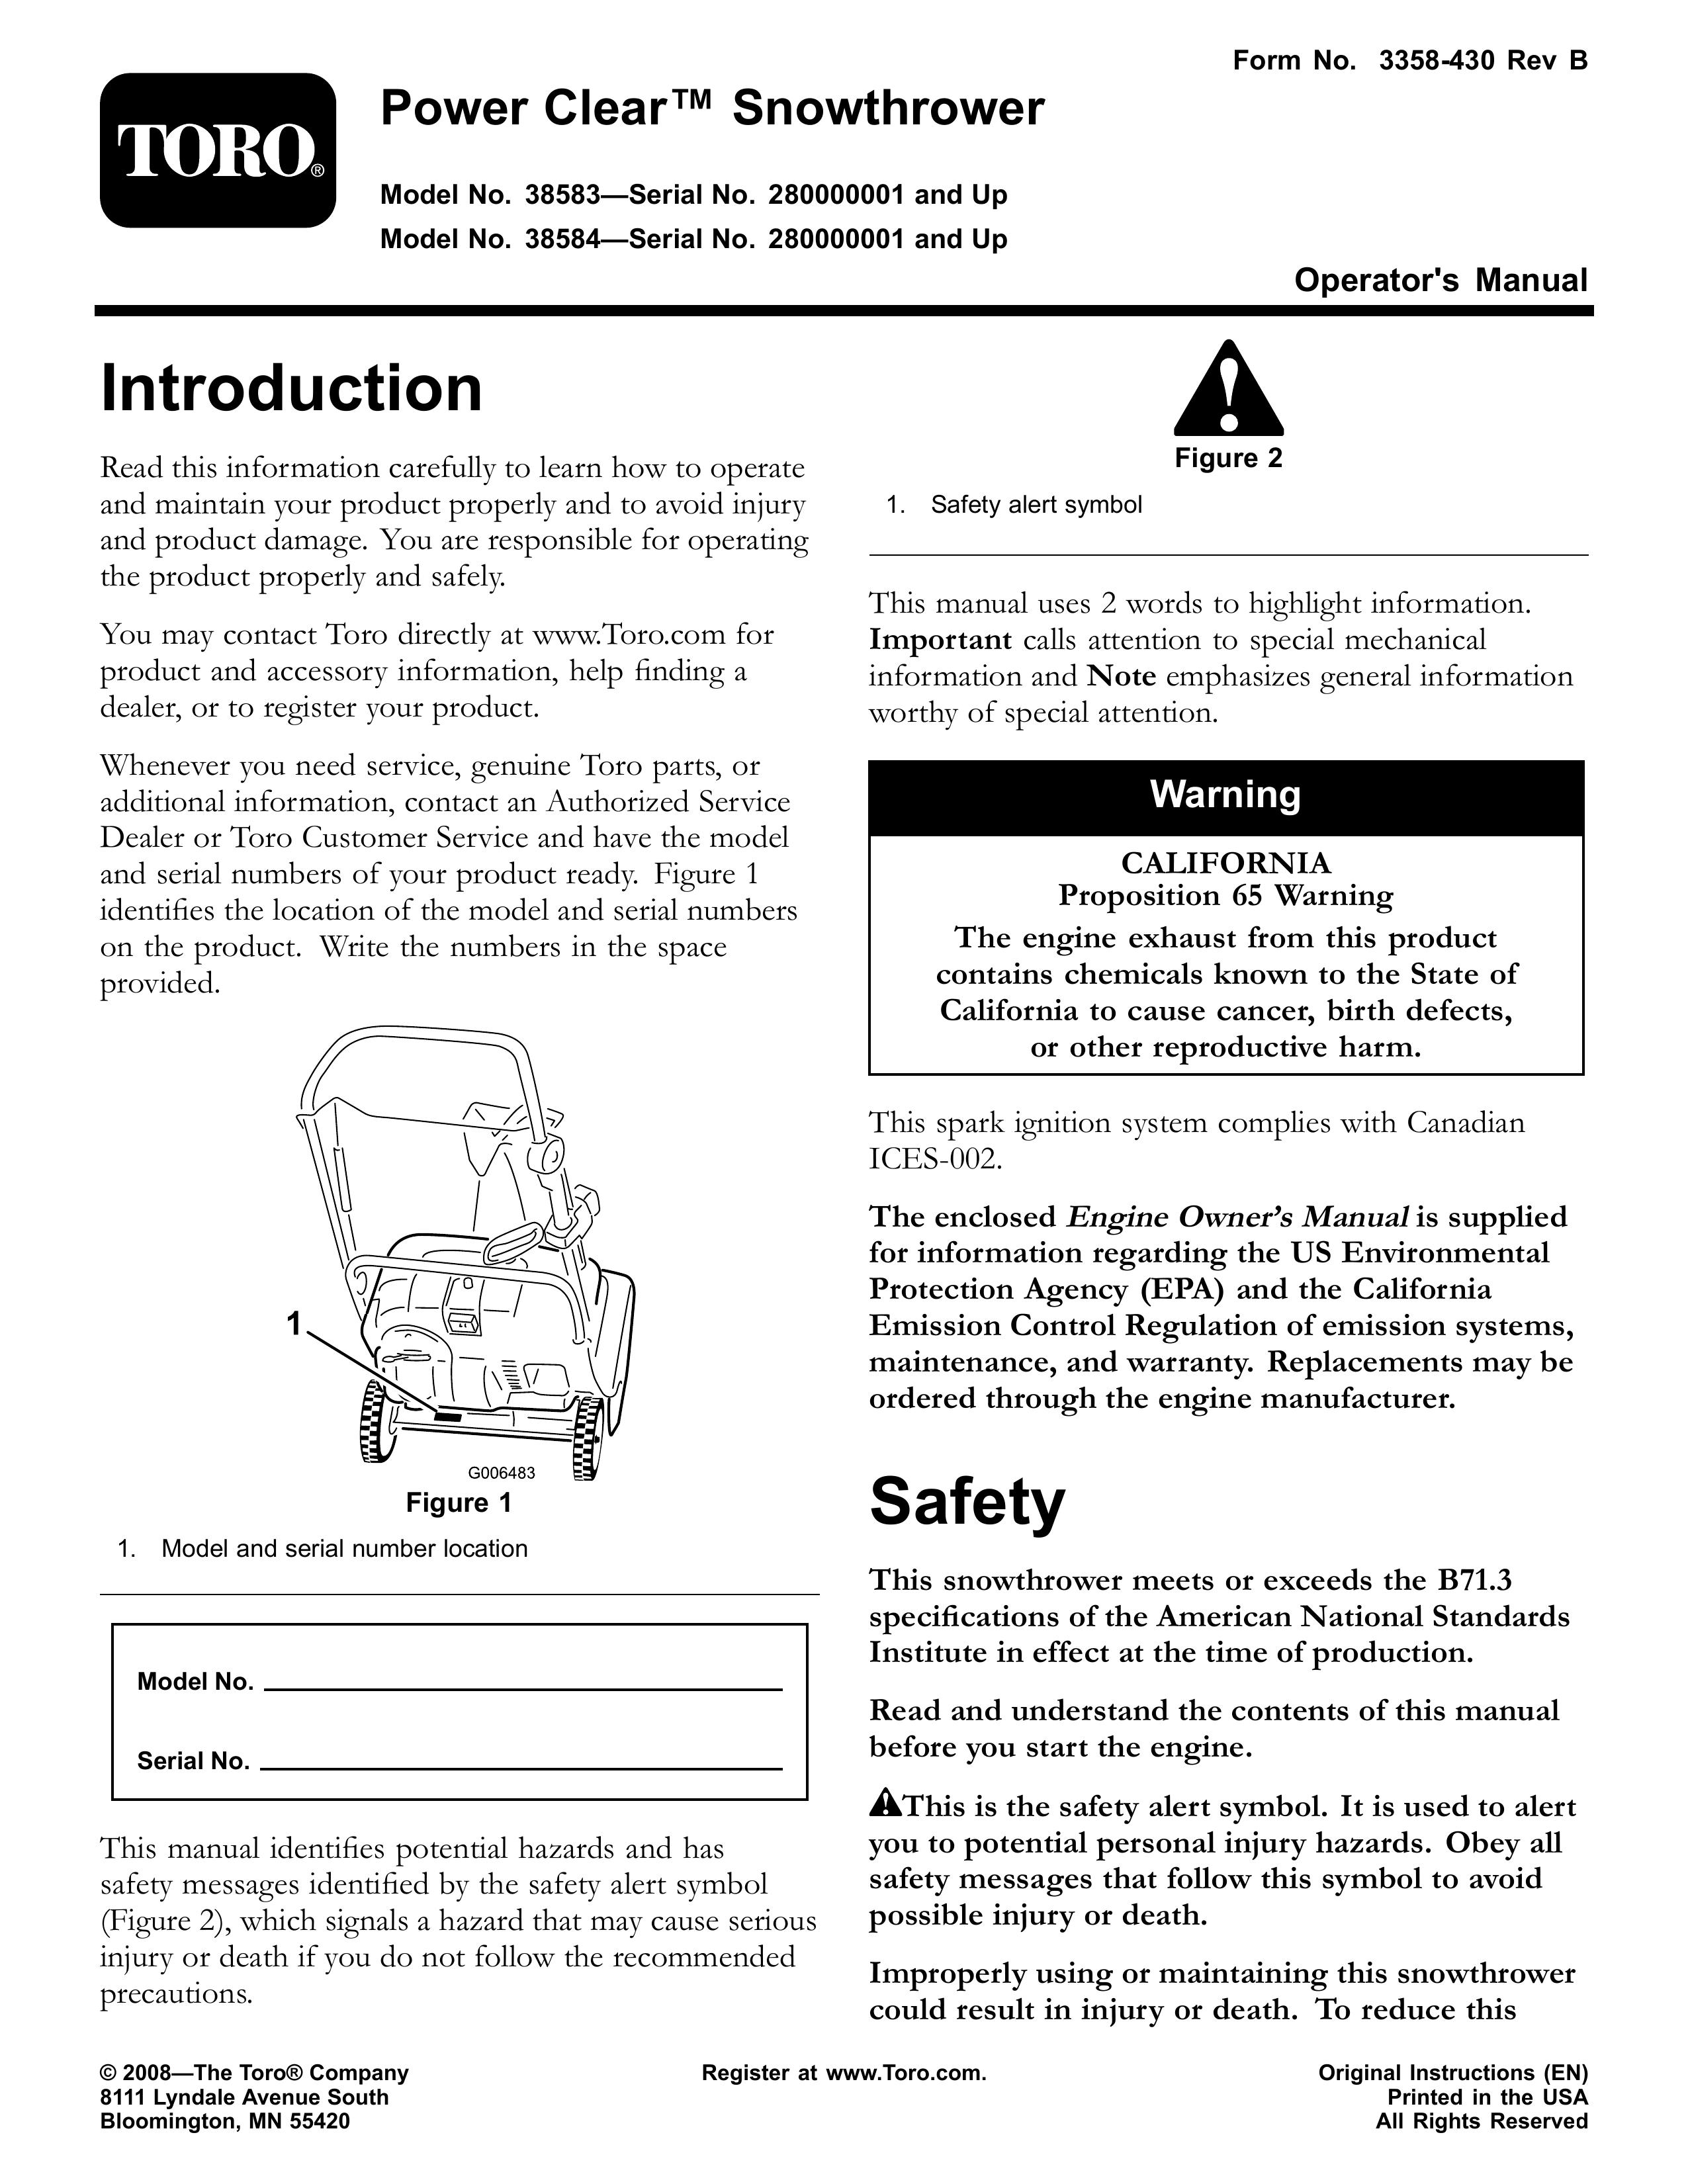 Toro 38583 Snow Blower User Manual